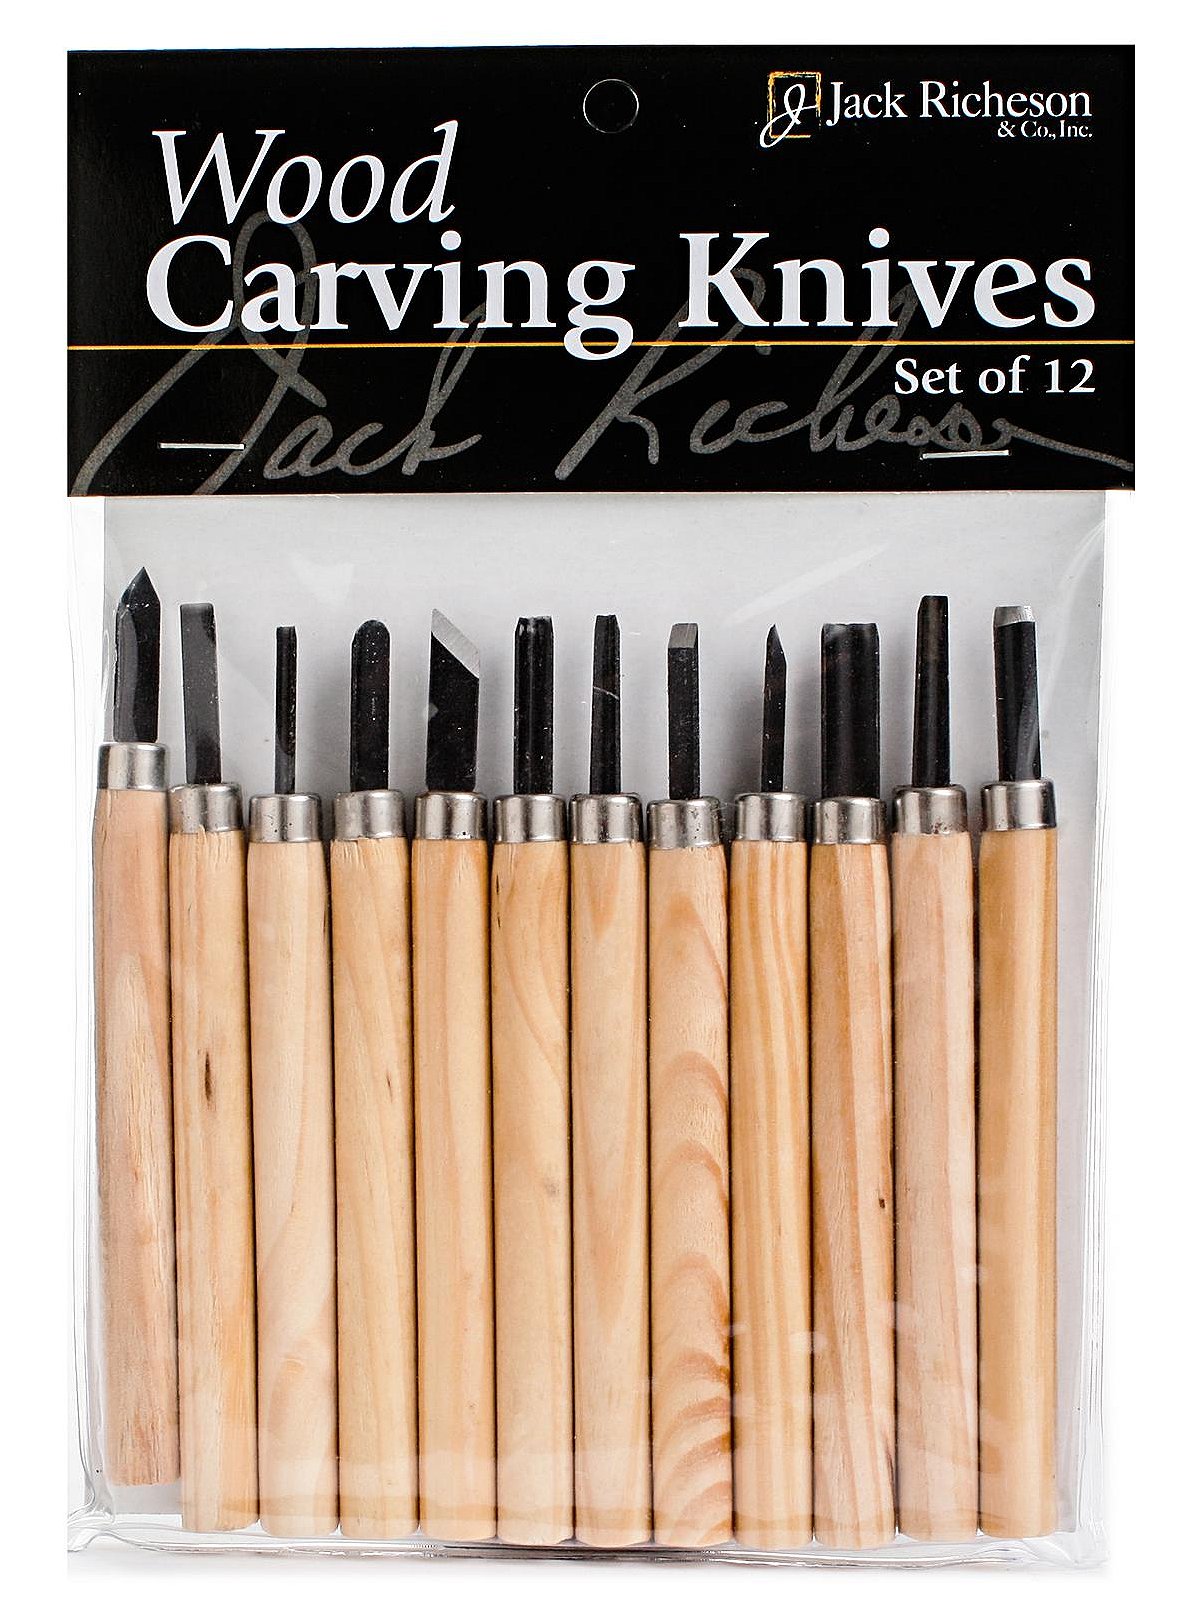 Wood carving knives